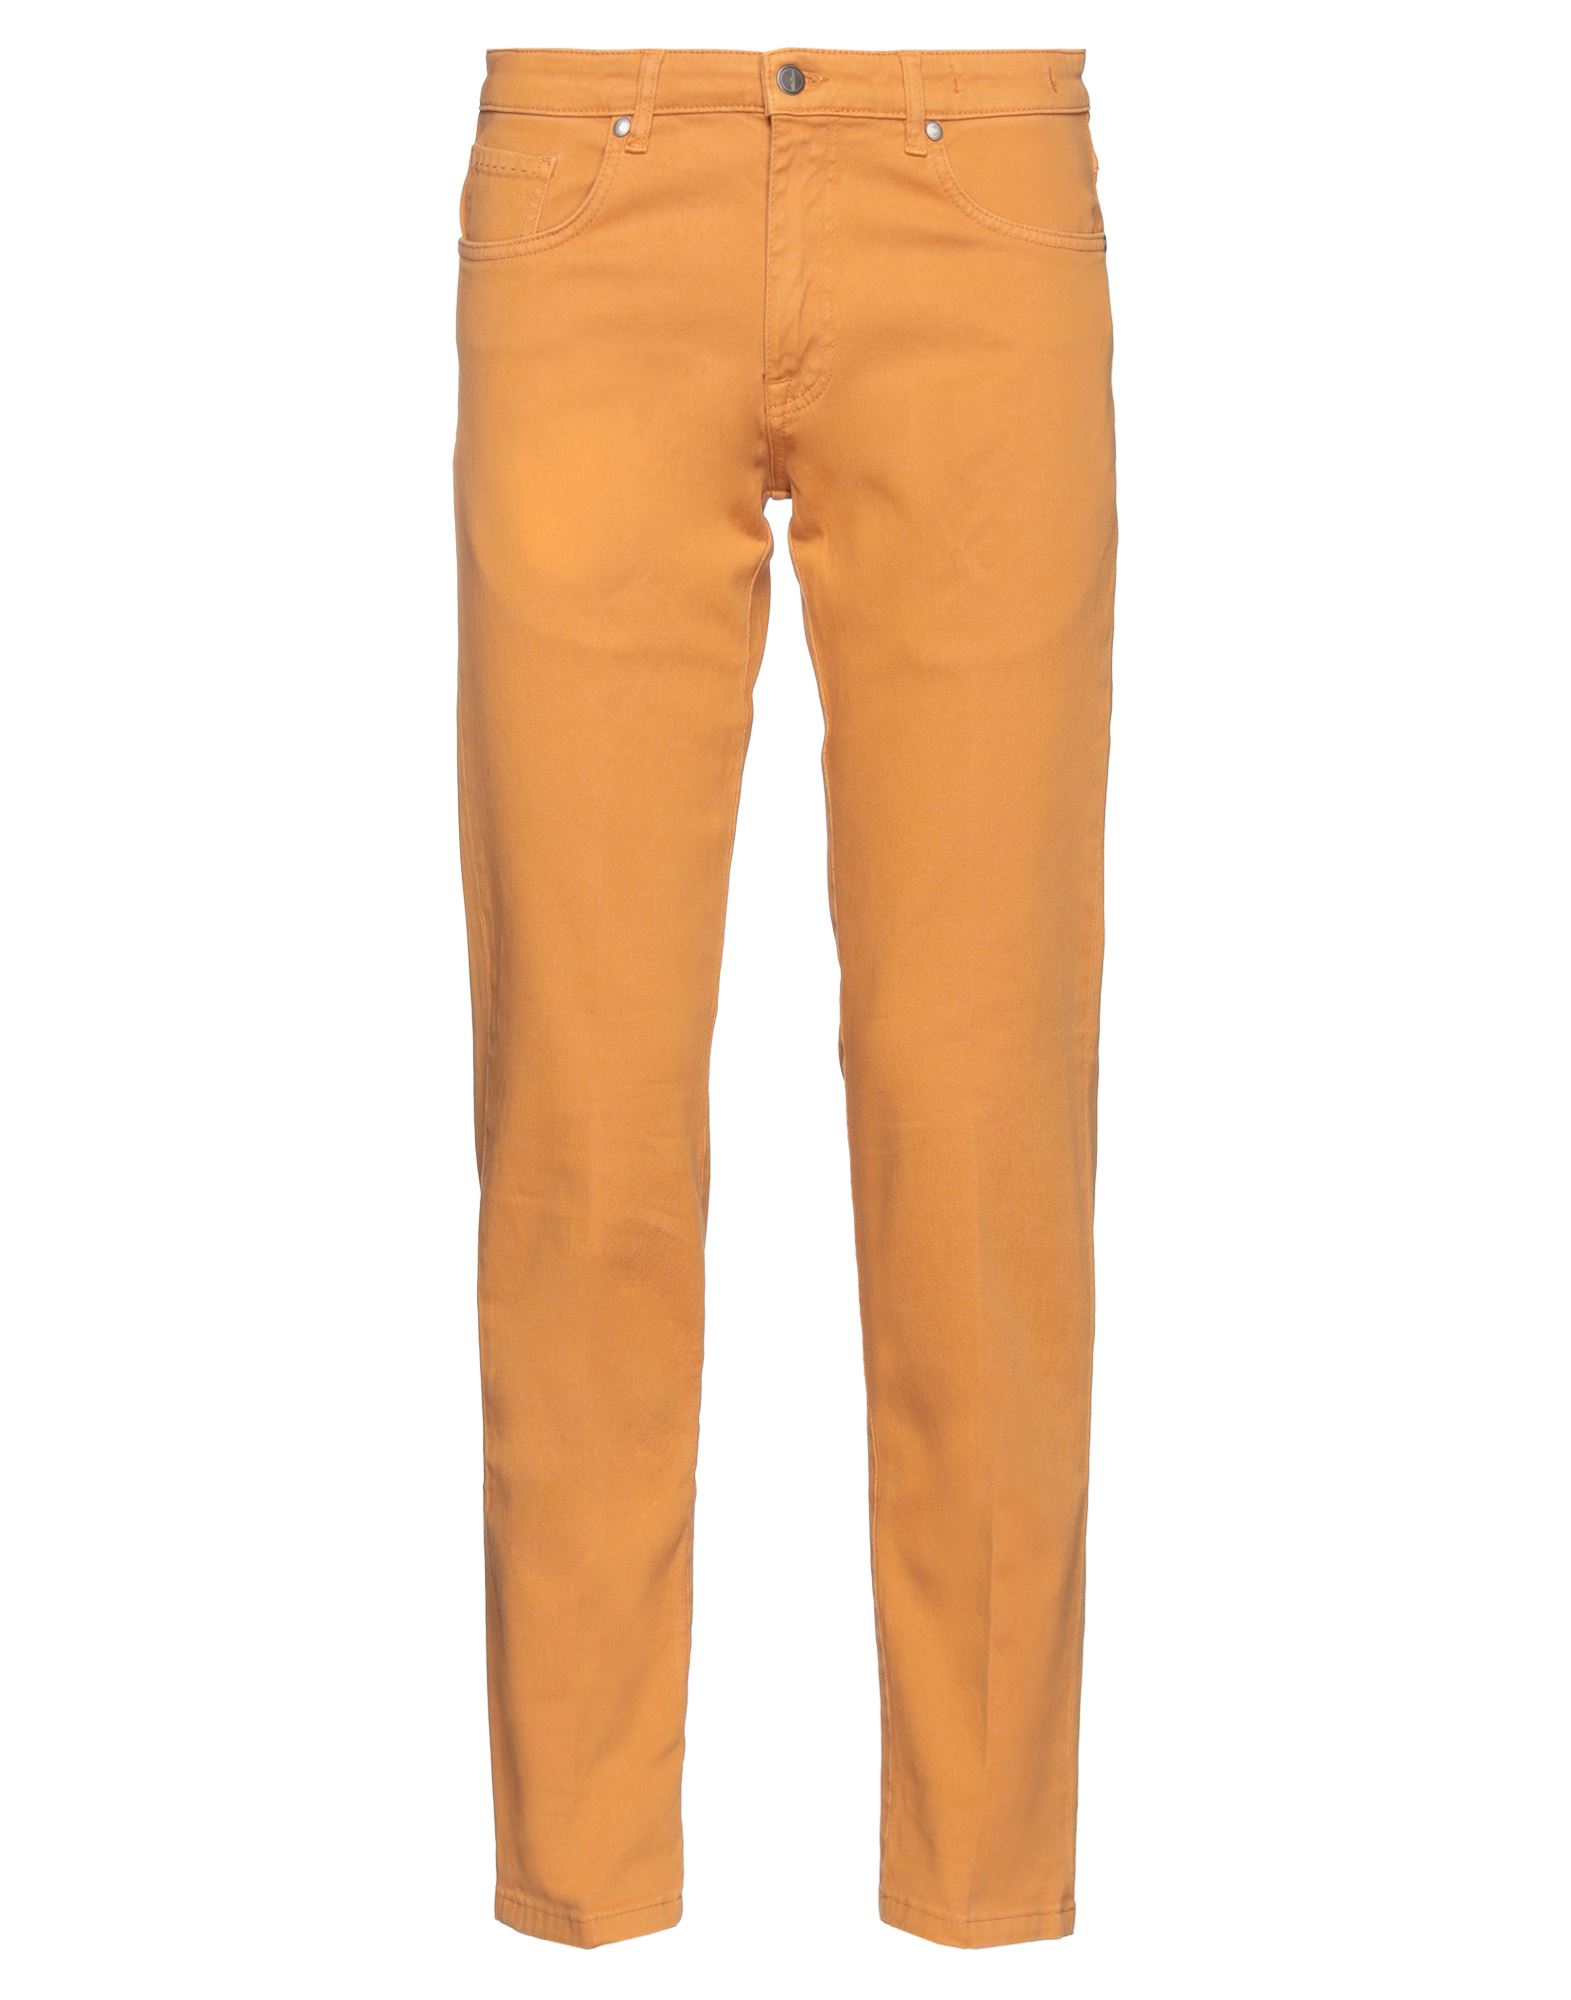 Betwoin Pants In Orange